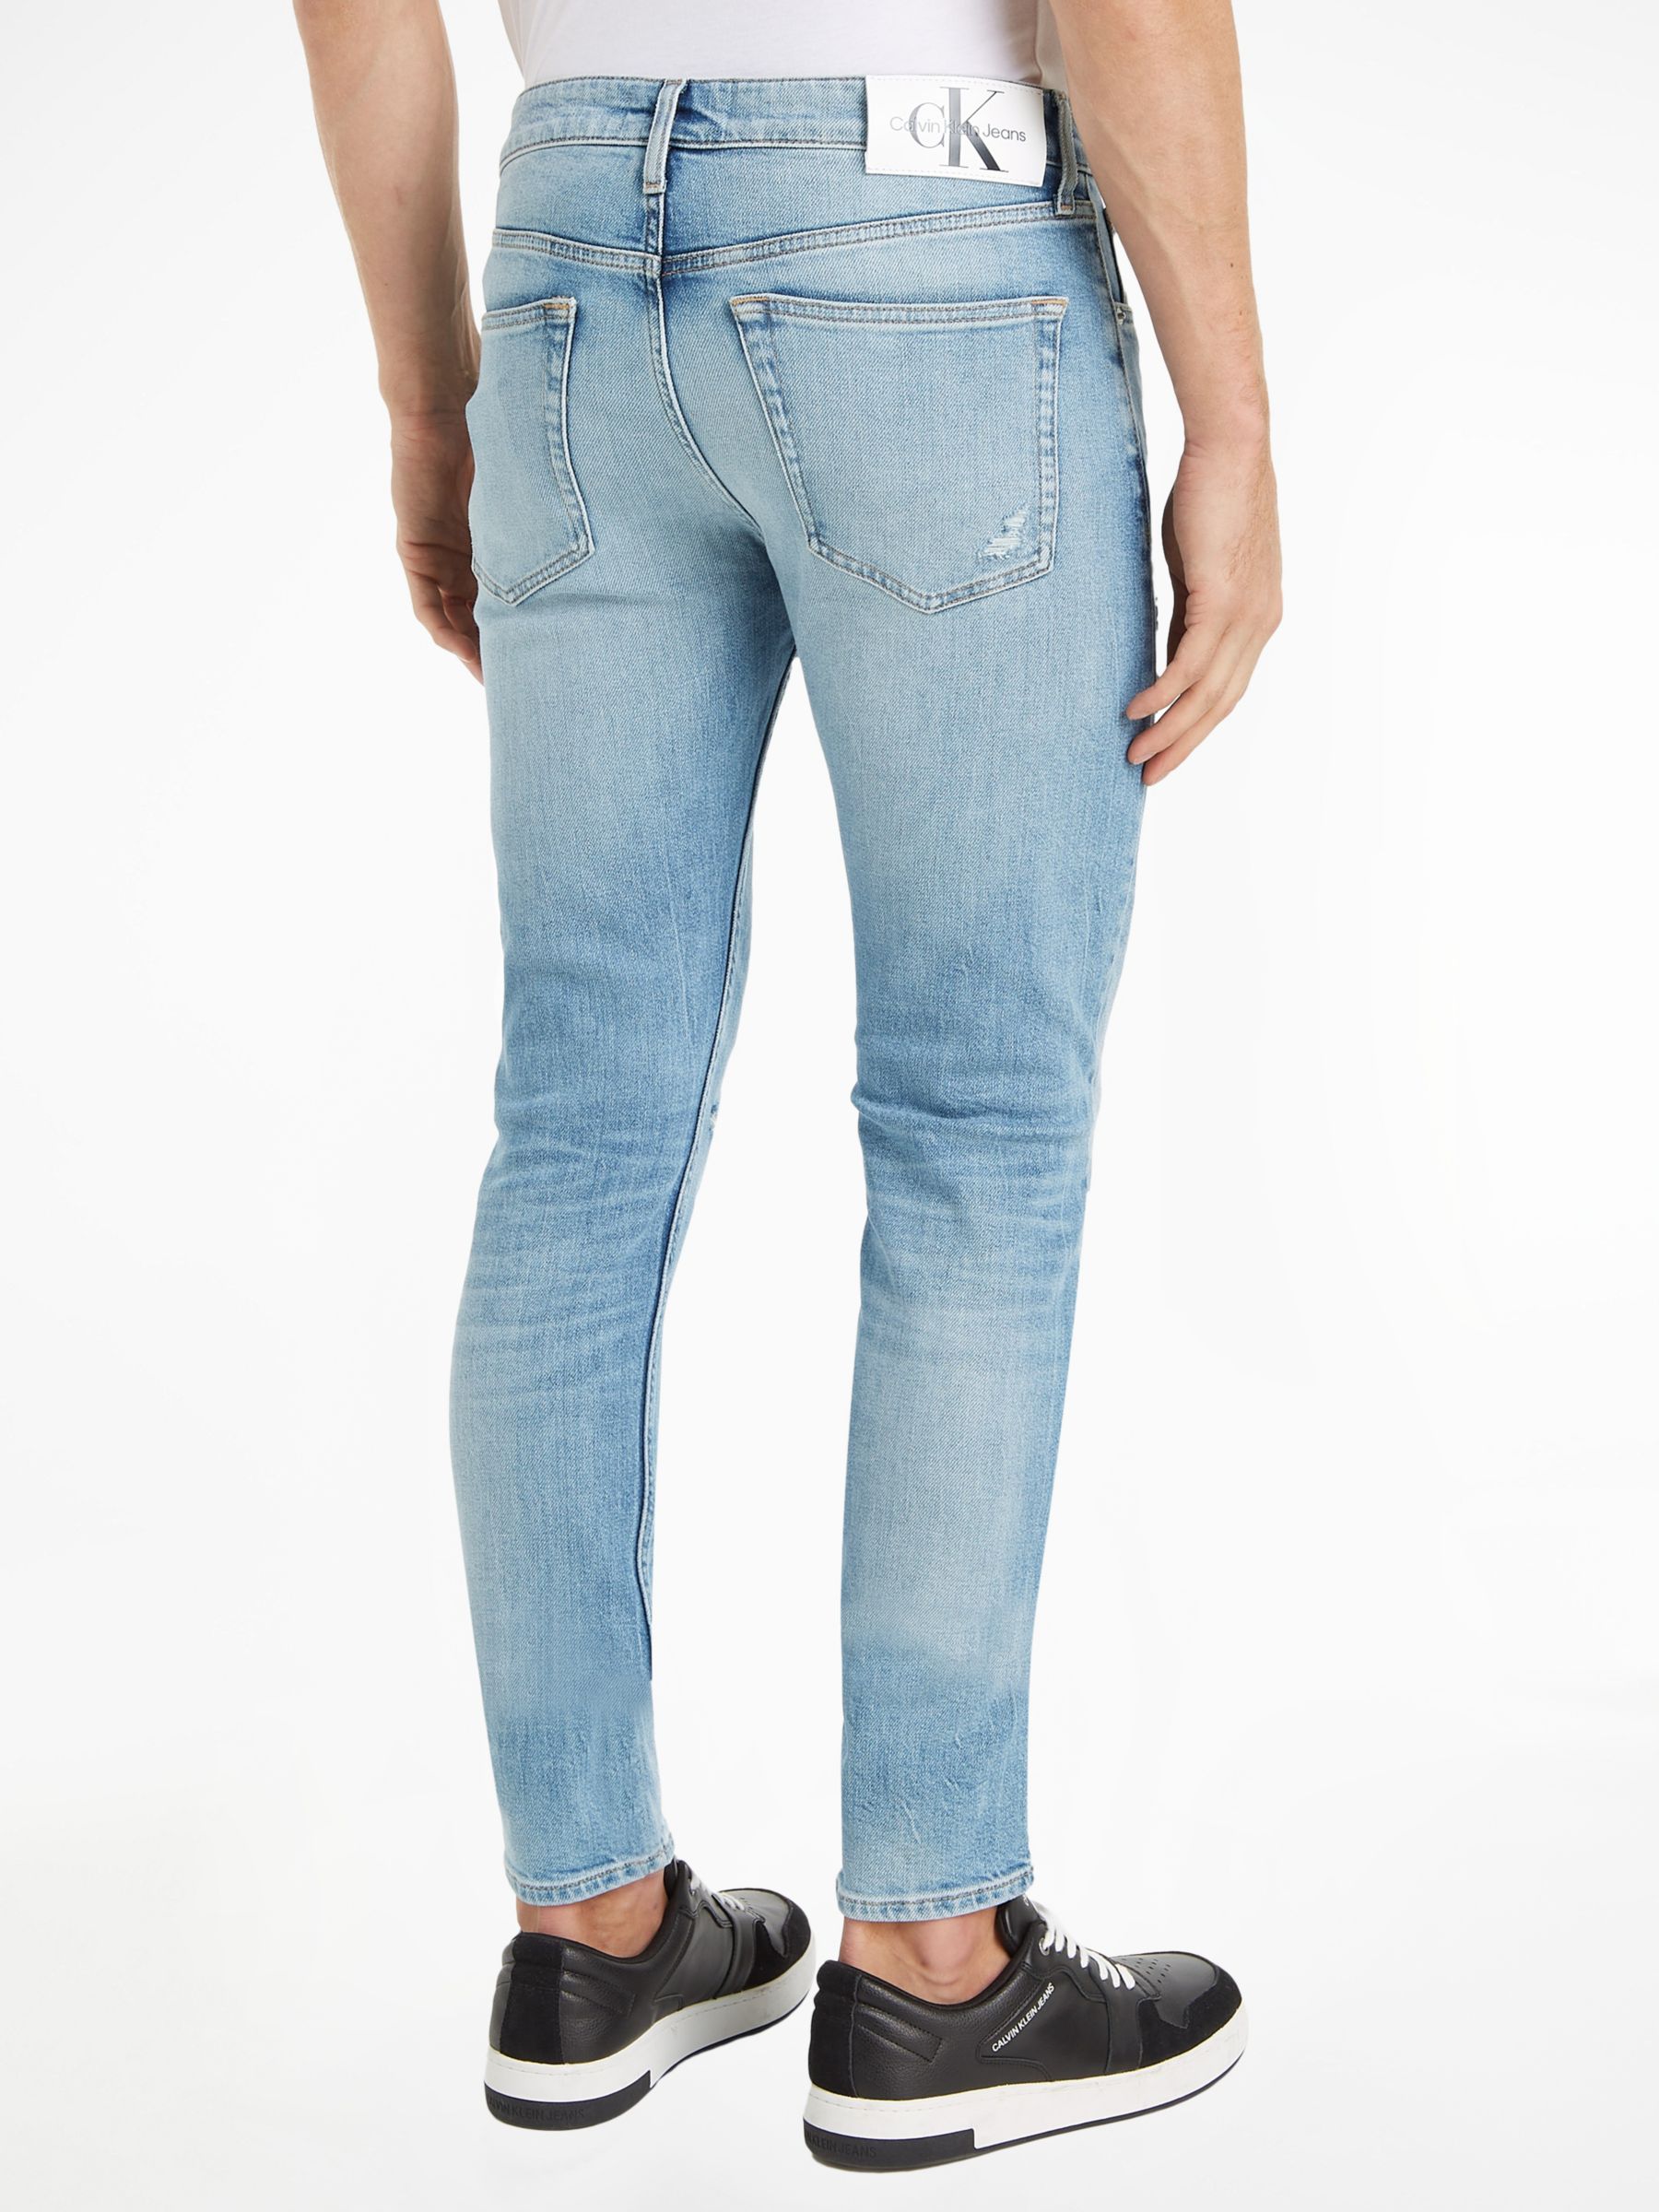 Calvin Klein Jeans Slim Tapered Jeans, Denim Light at John Lewis & Partners